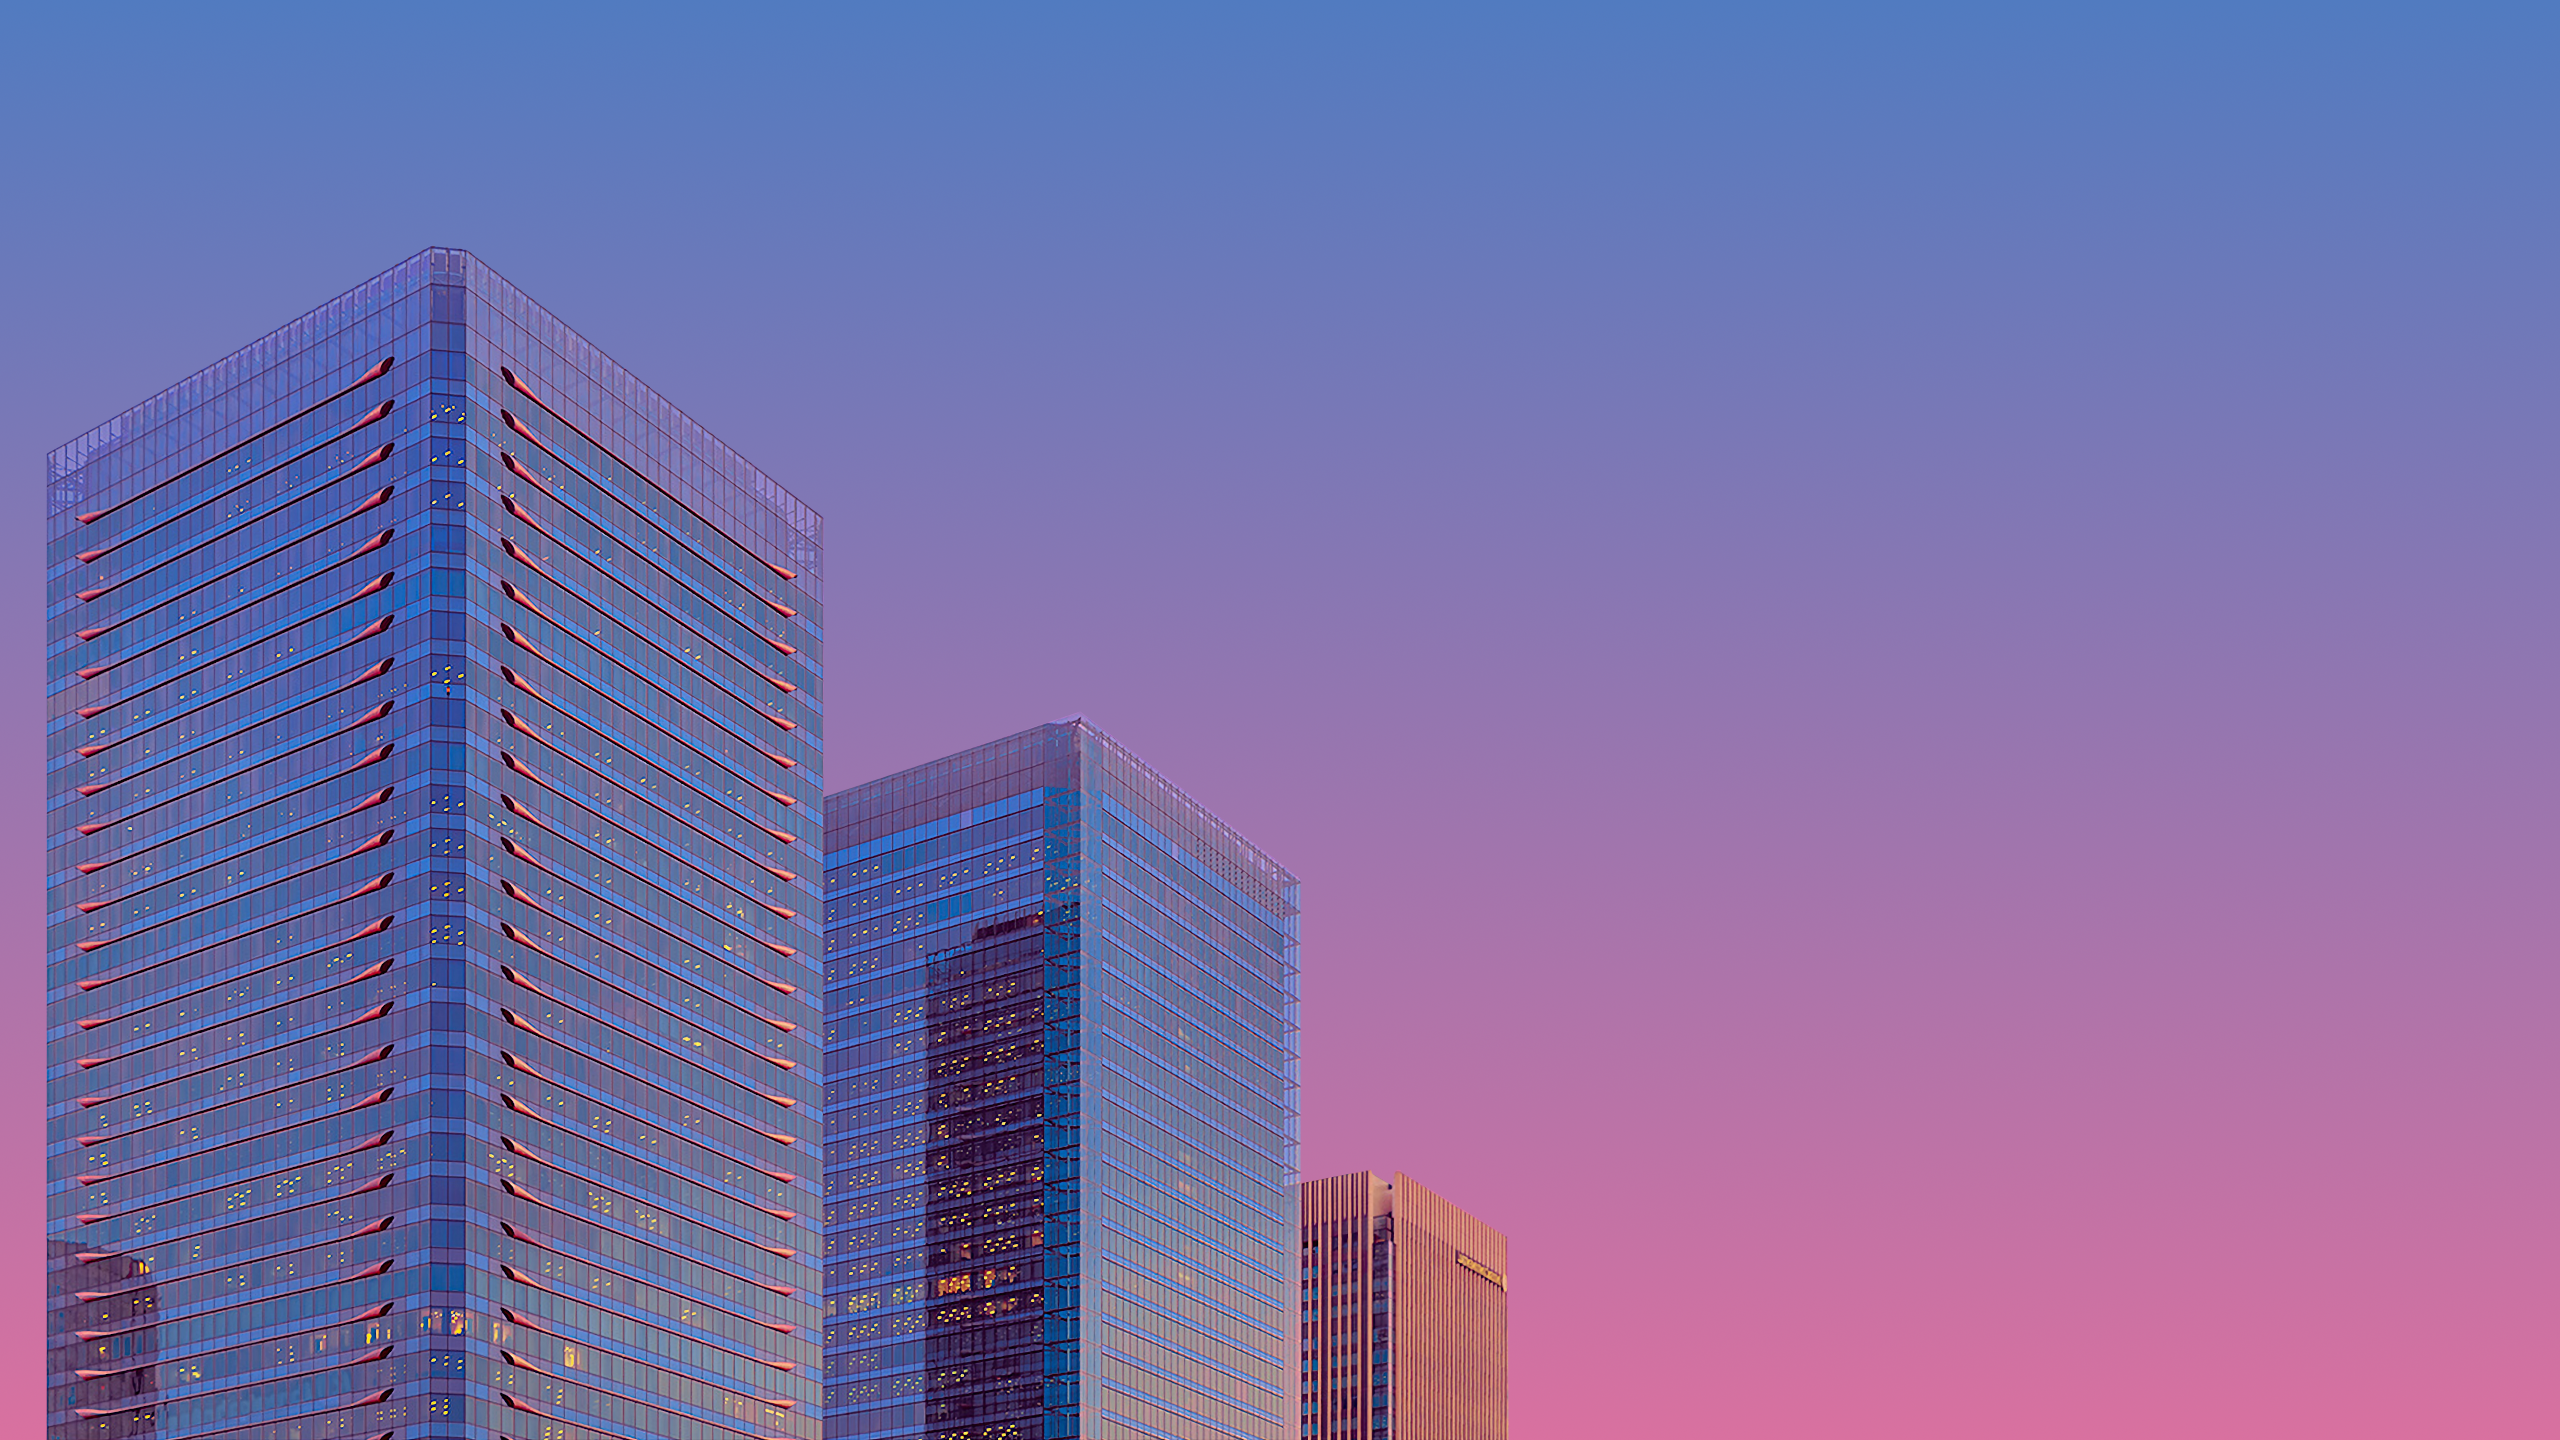 General 2560x1440 purple sky skyscraper vaporwave building city simple background digital art